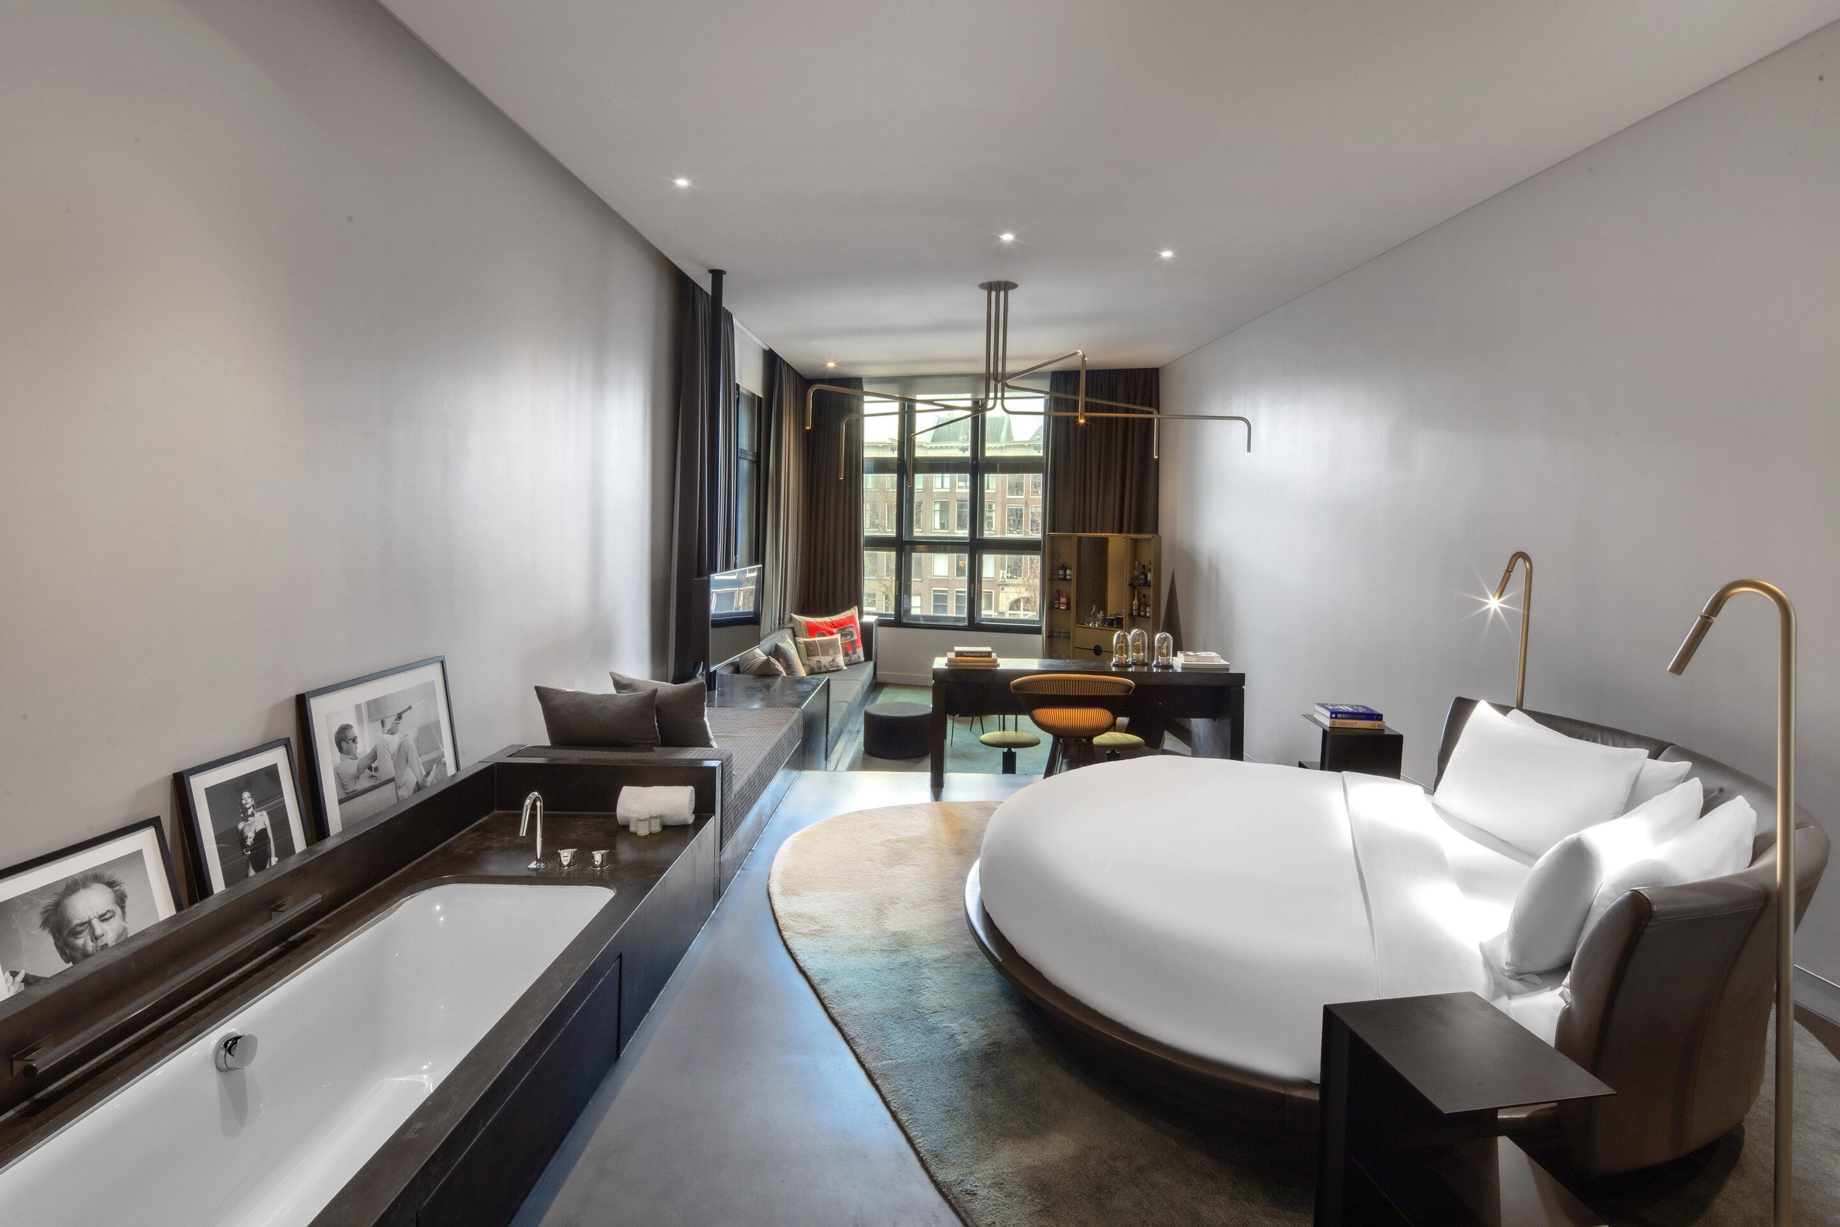 W Amsterdam Hotel – Amsterdam, Netherlands – WOW Bank One Bedroom Studio Suite Decor